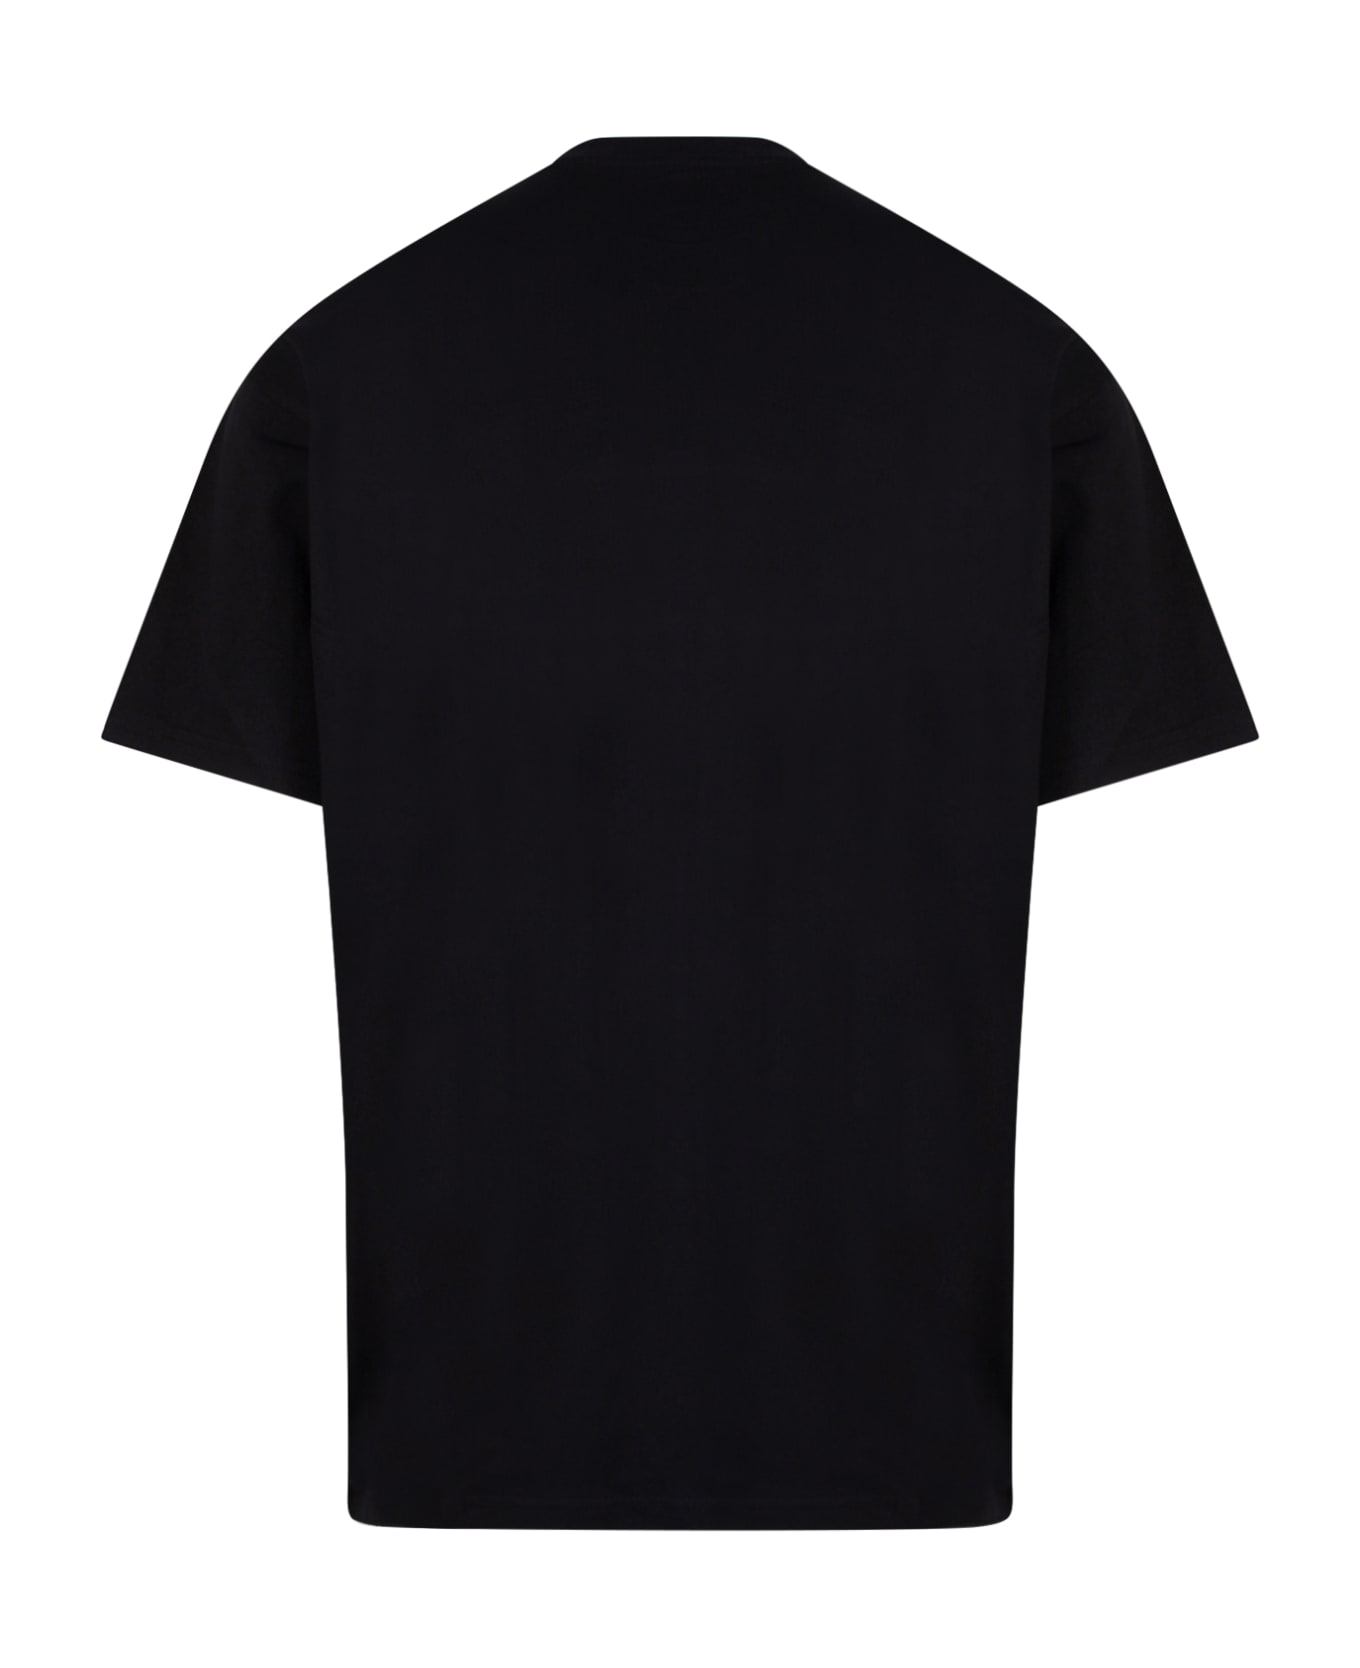 Carhartt Script Embroidery T-shirt - Black シャツ